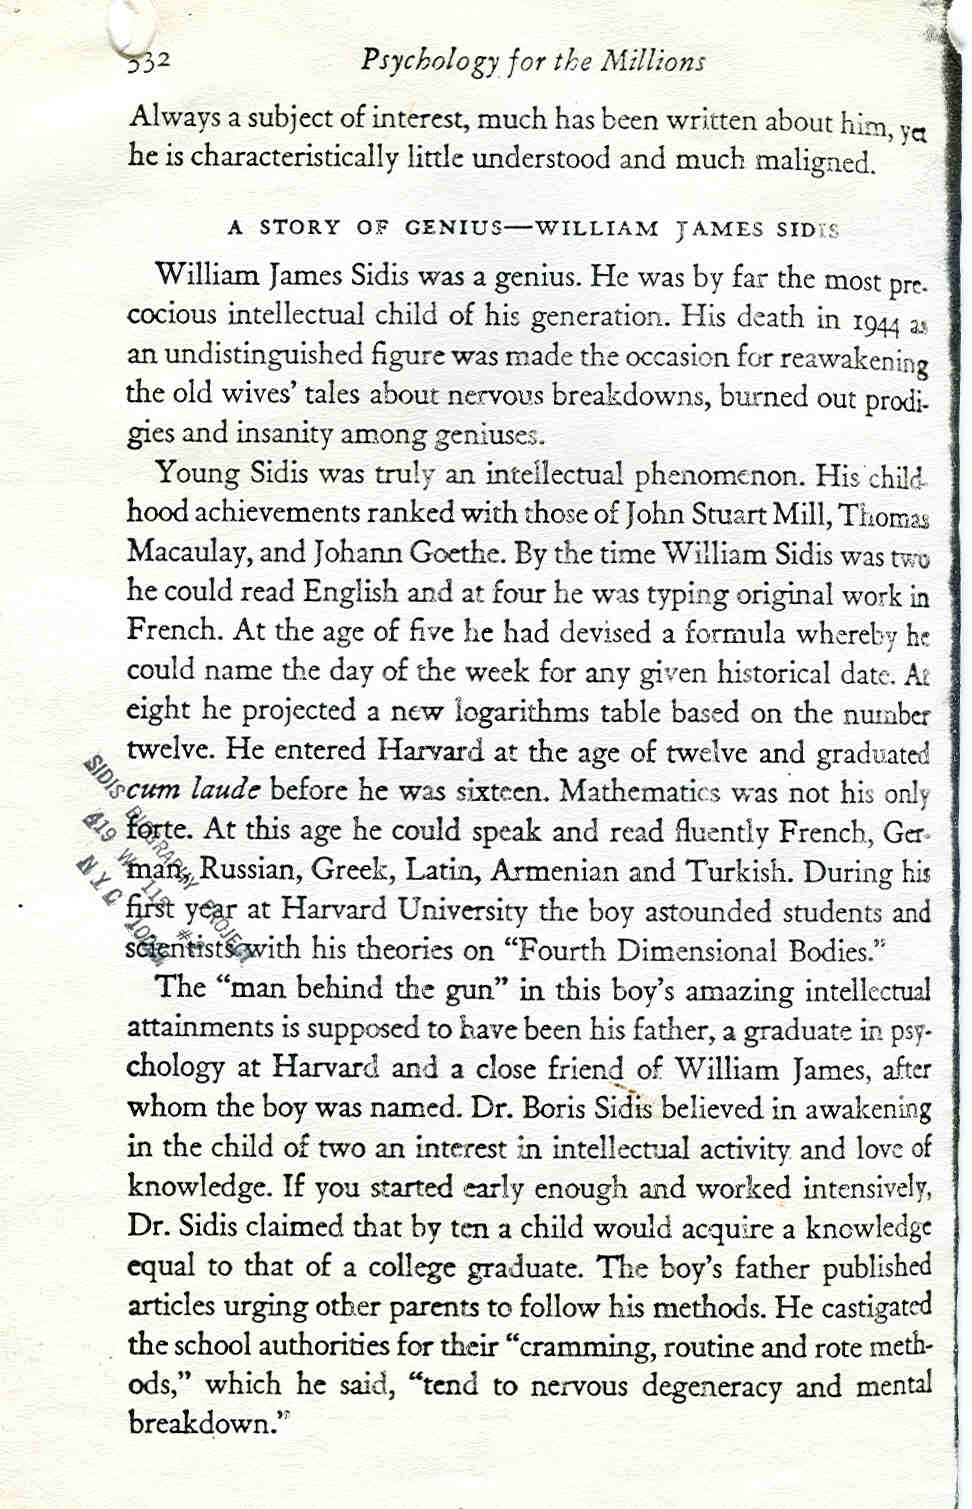 William James Sidis Biography - American child prodigy (1898–1944)